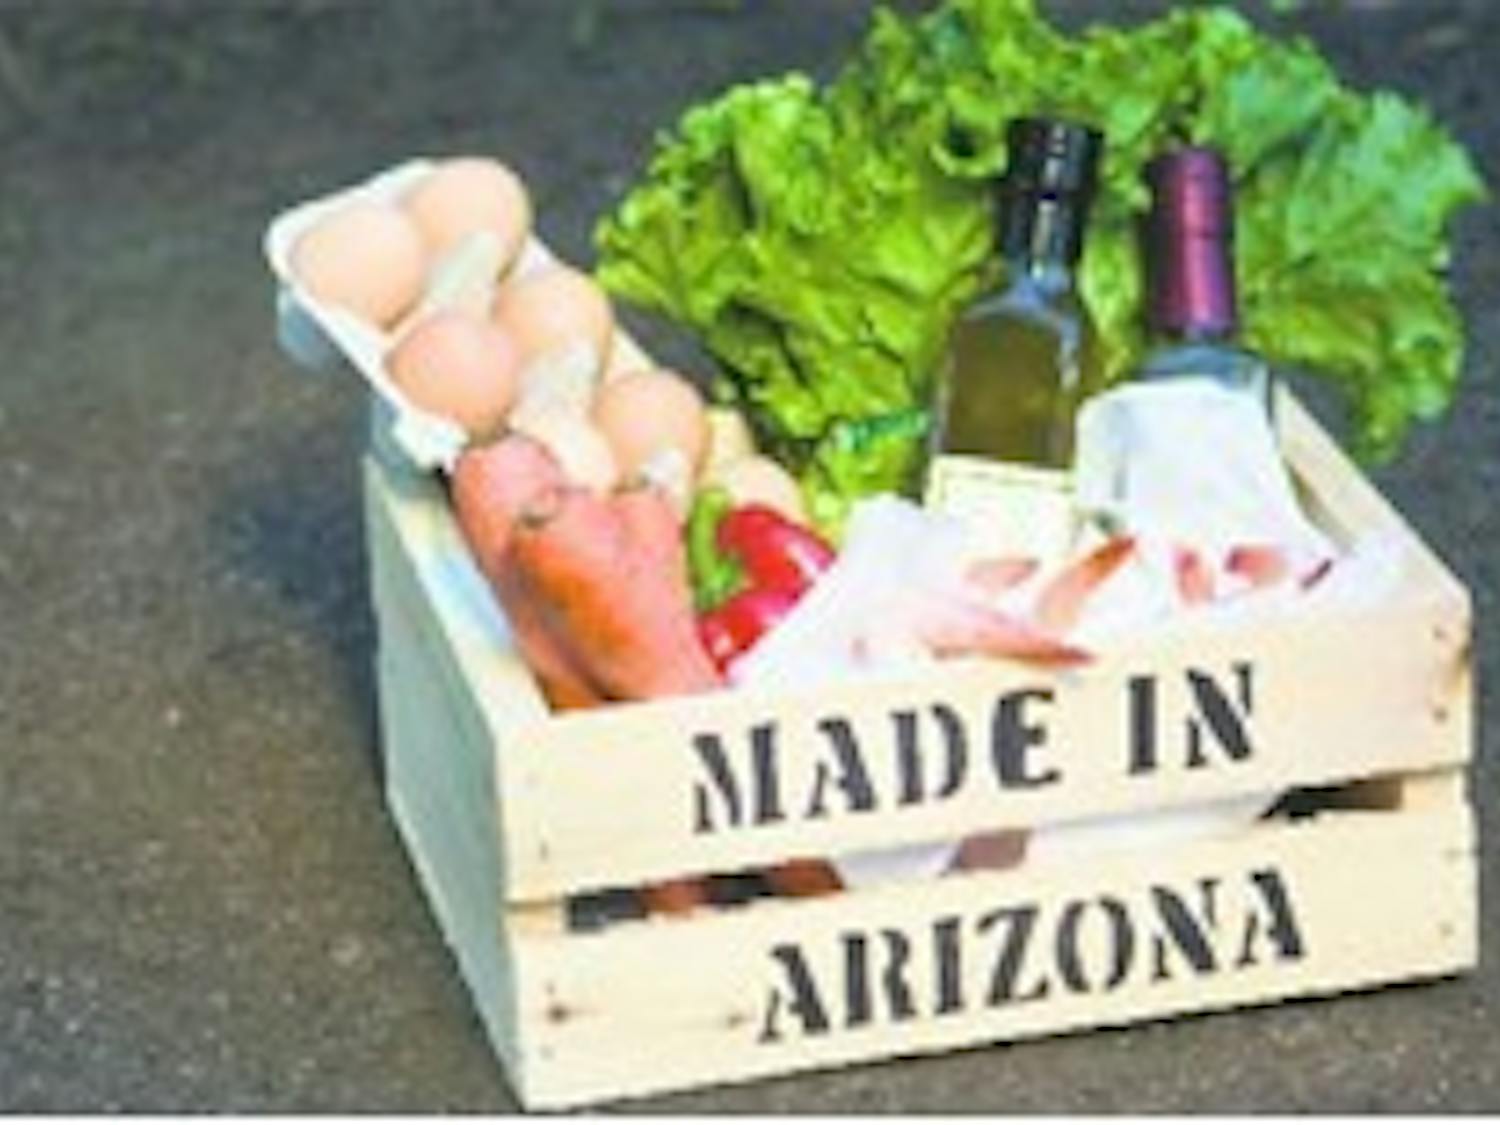 Let’s celebrate Earth Day everyday buy eating locally grown food! Photo courtesy of Mark W. Lipczynski/The Arizona Republic